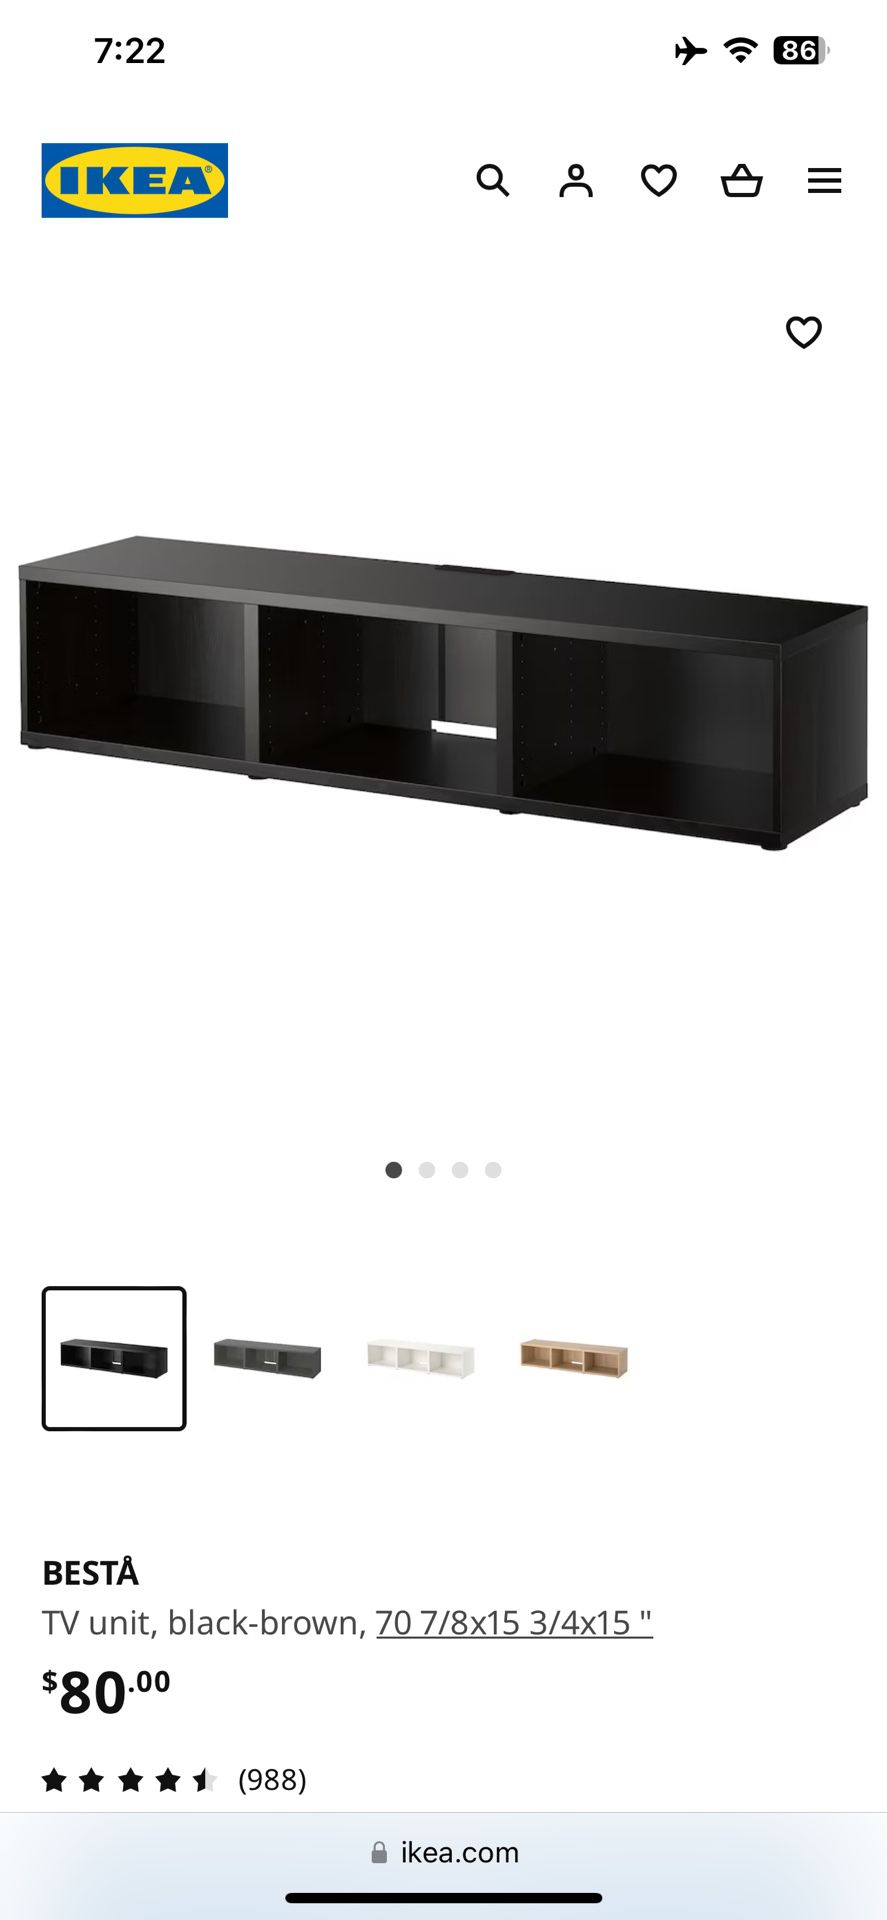 Ikea Tv Stand 